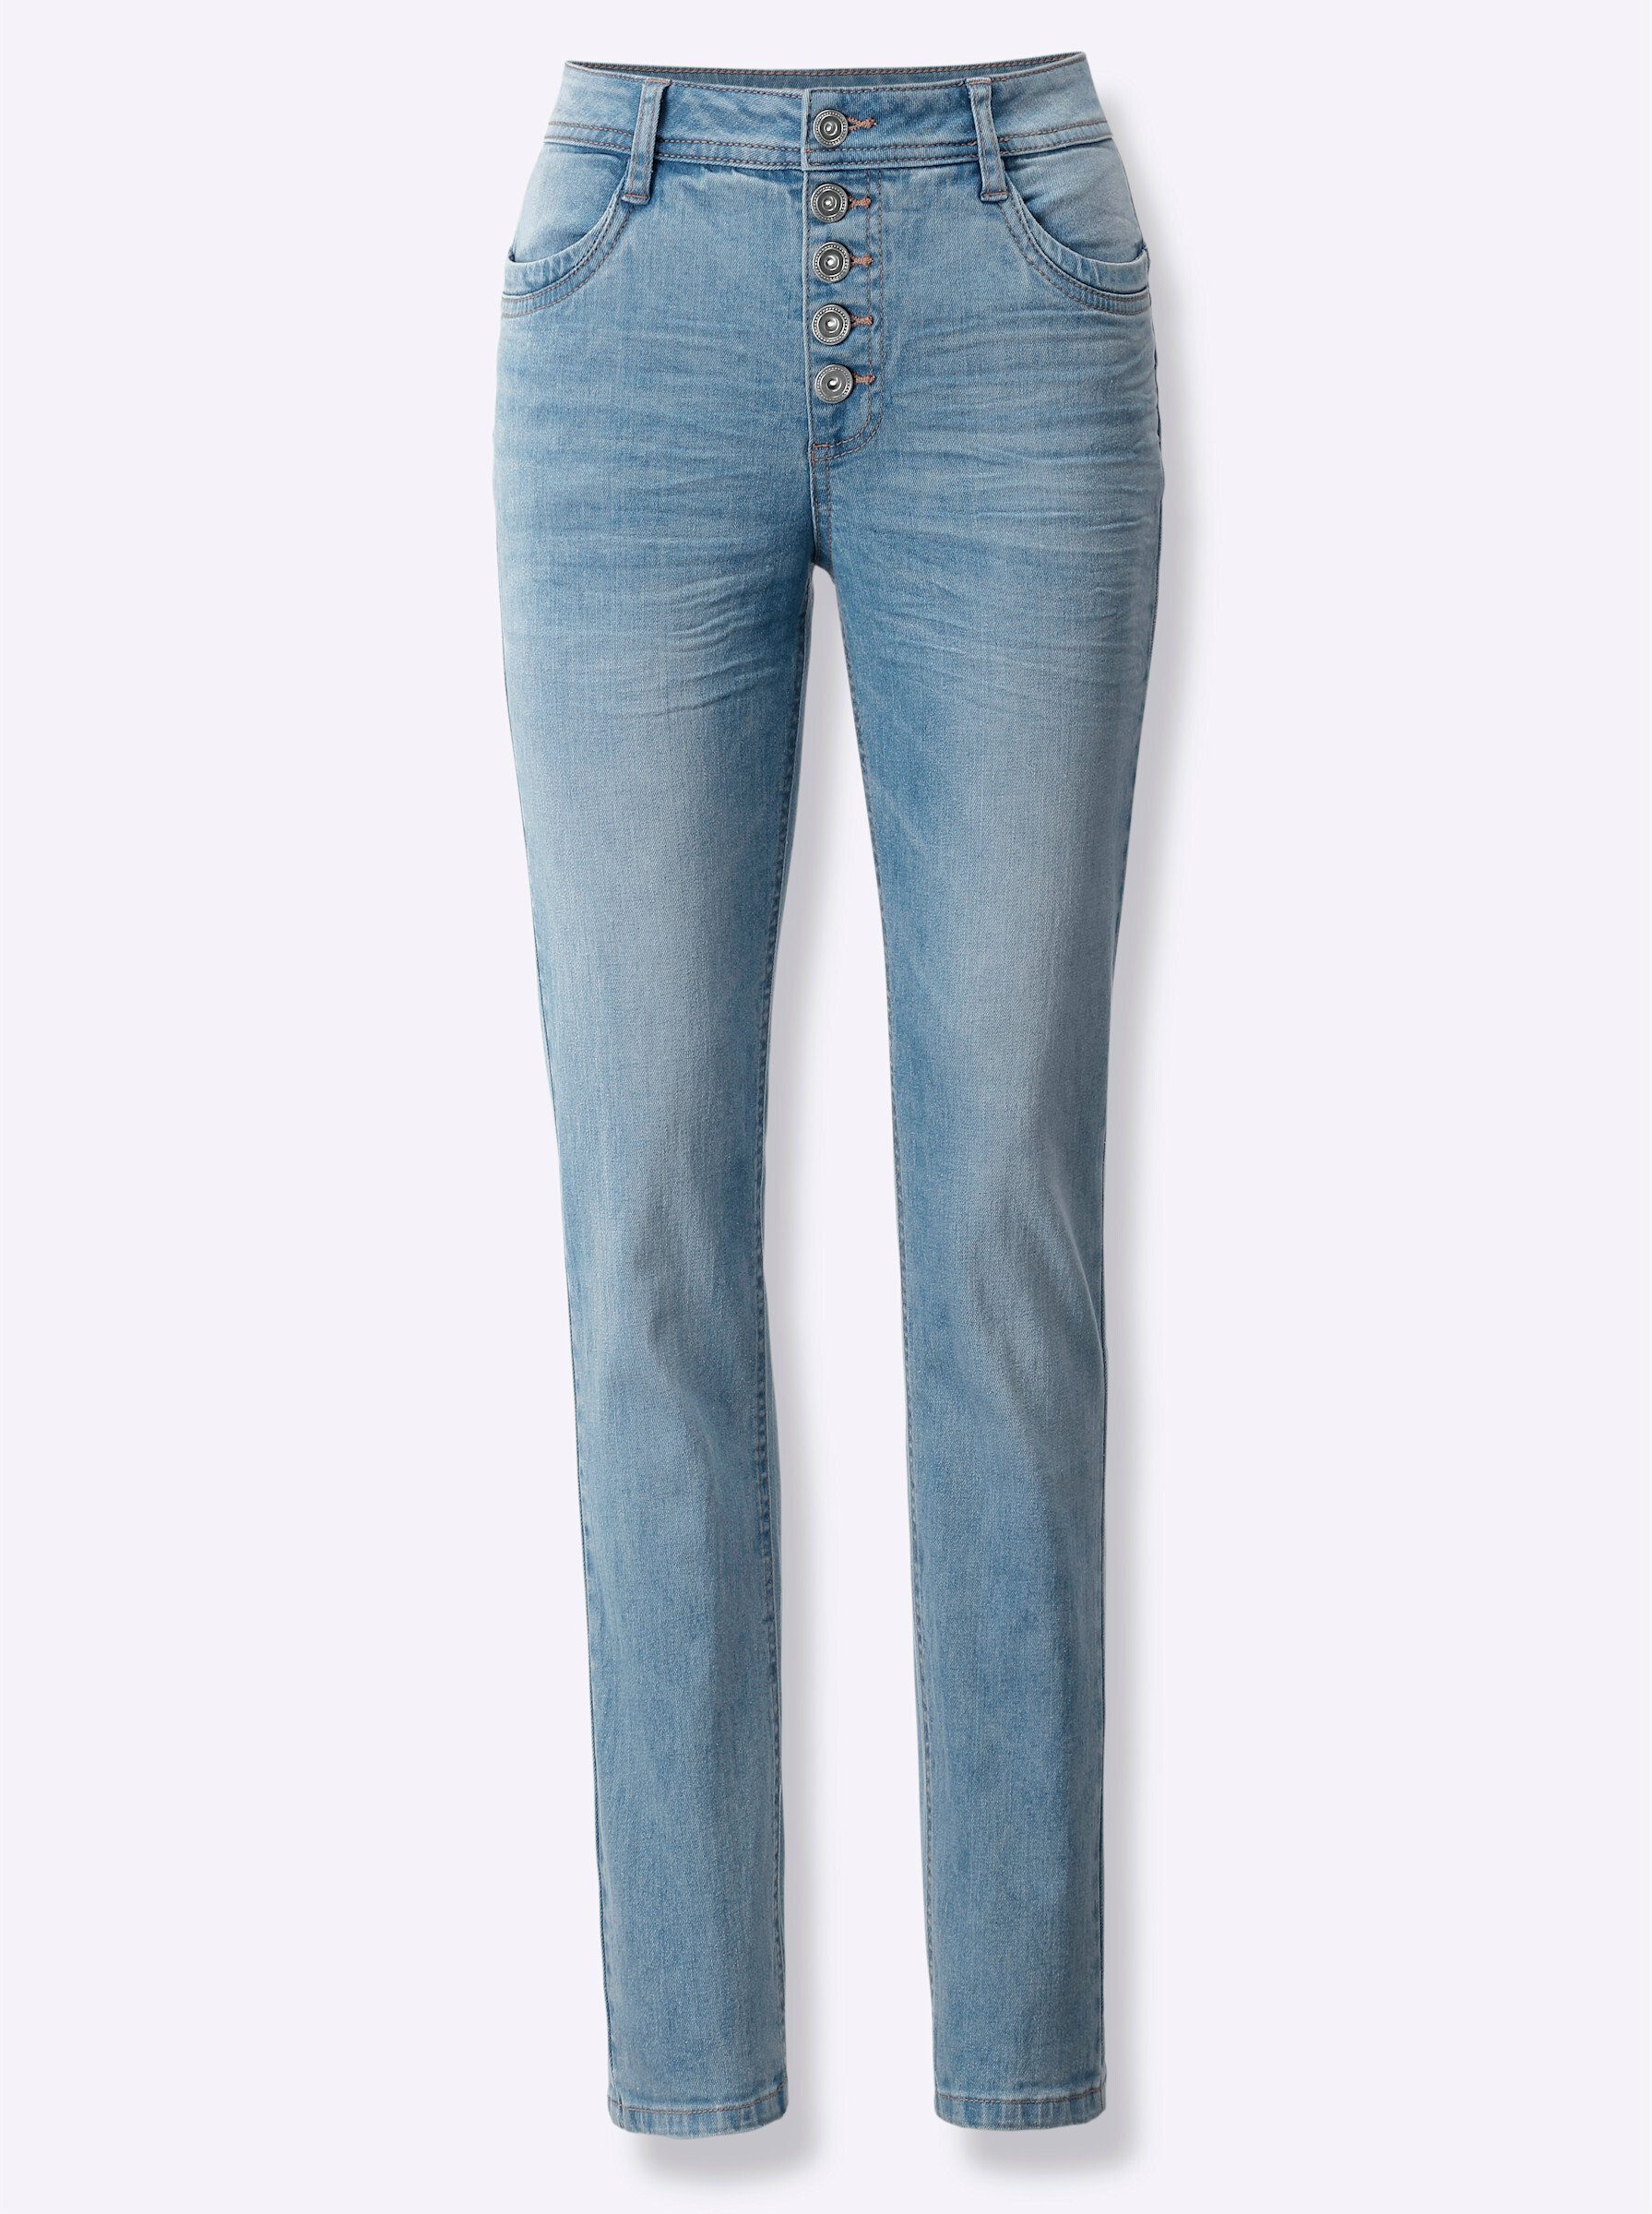 Jeans Bequeme blue-bleached heine